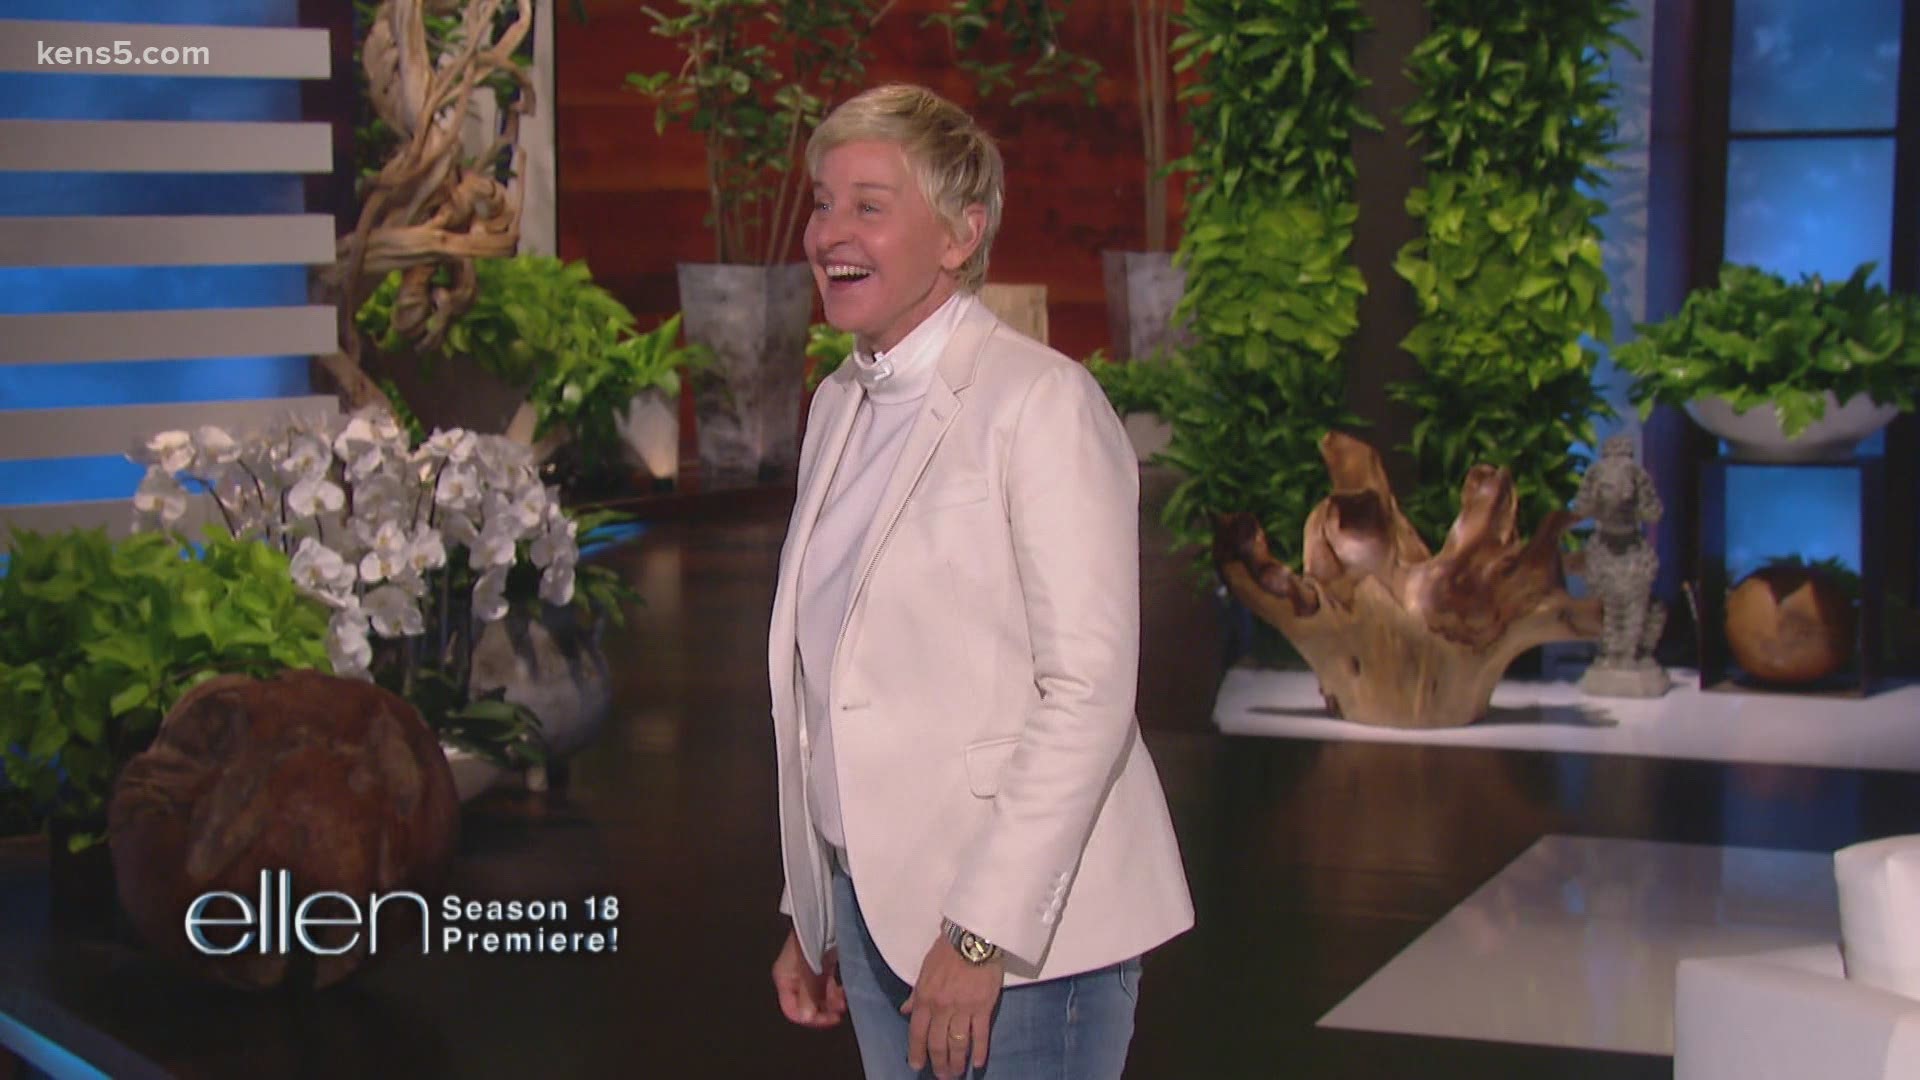 Ellen's long-running daytime talk show will end after its 19th season.